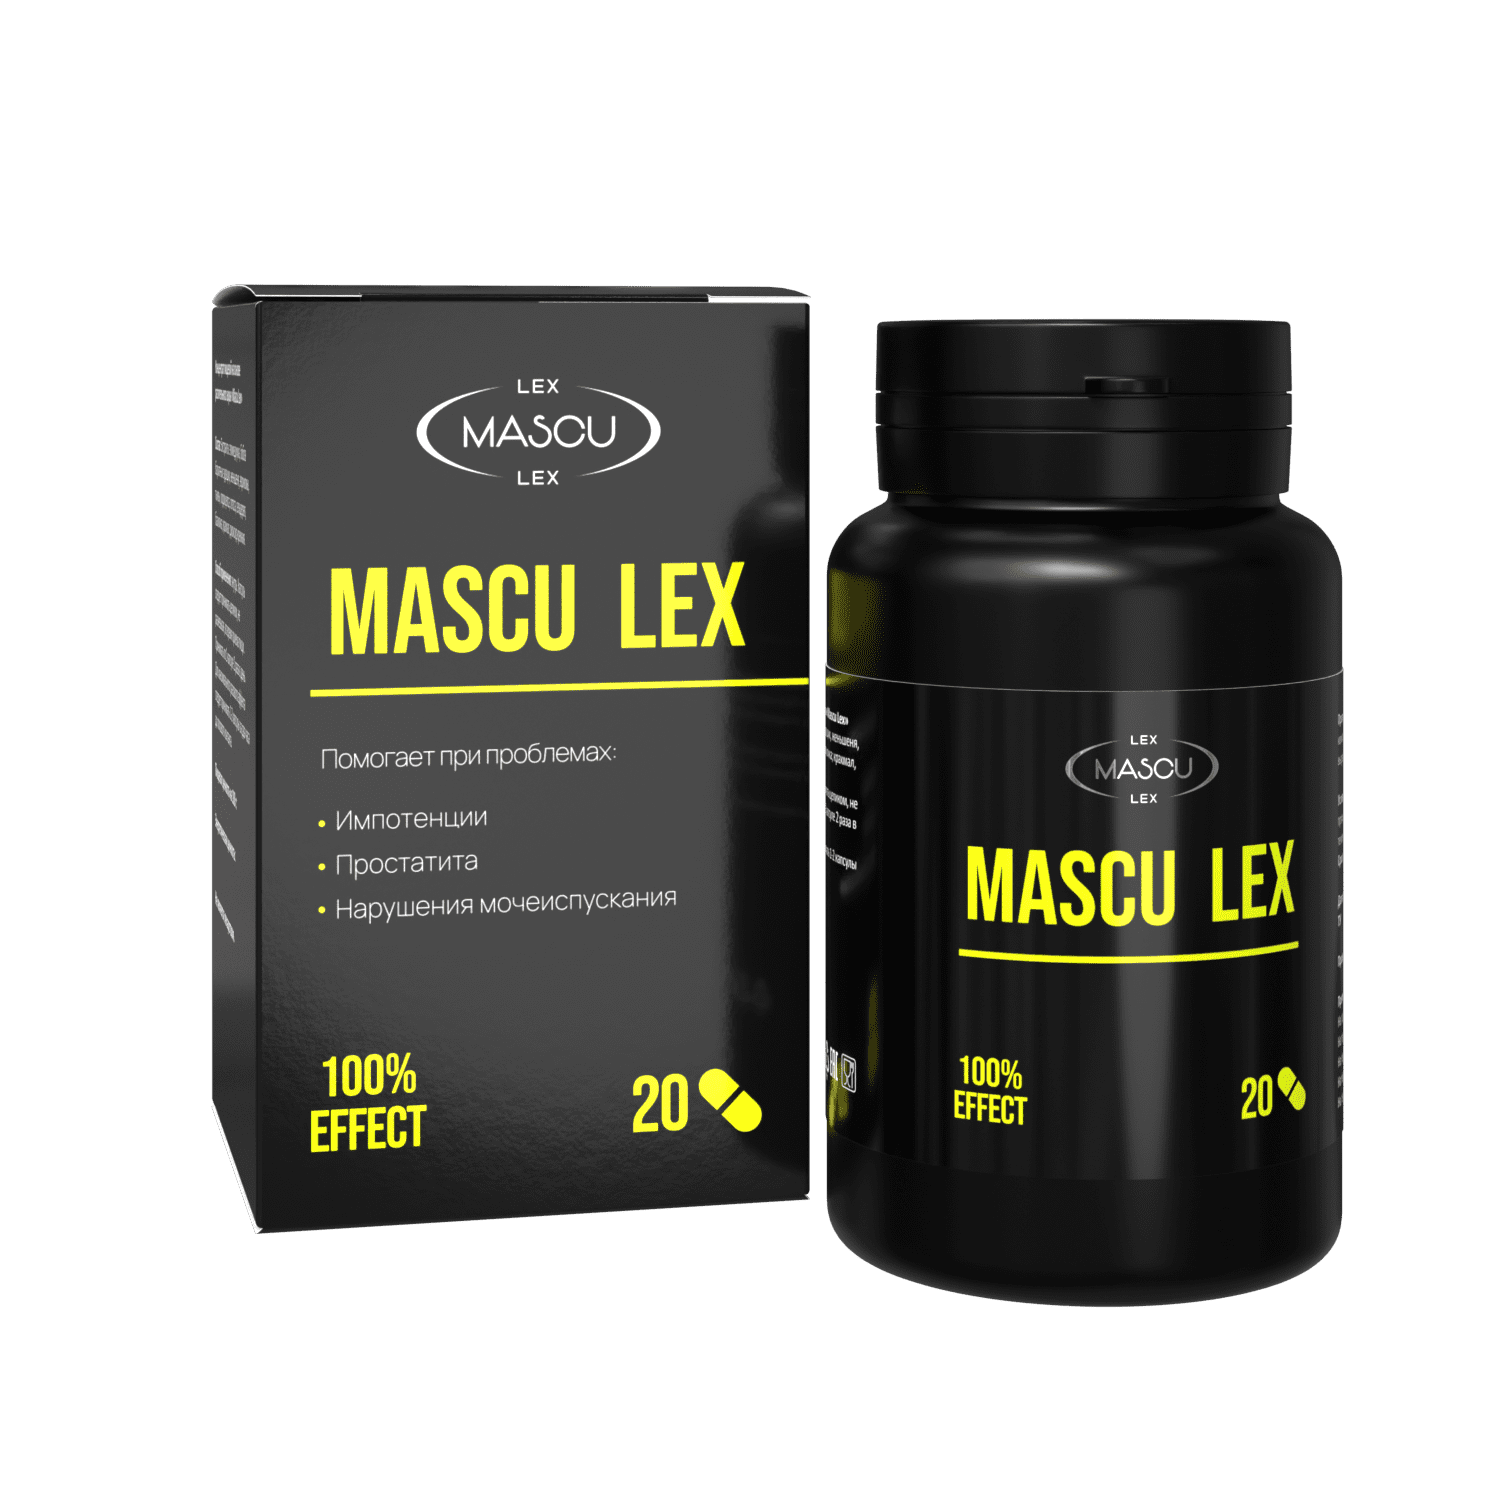 Mascu lex препарат для мужчин отзывы. Mascu Lex капсулы. БАДЫ для потенции. Mascu Lex препарат для мужчин. Mascu Lex реальные отзывы.